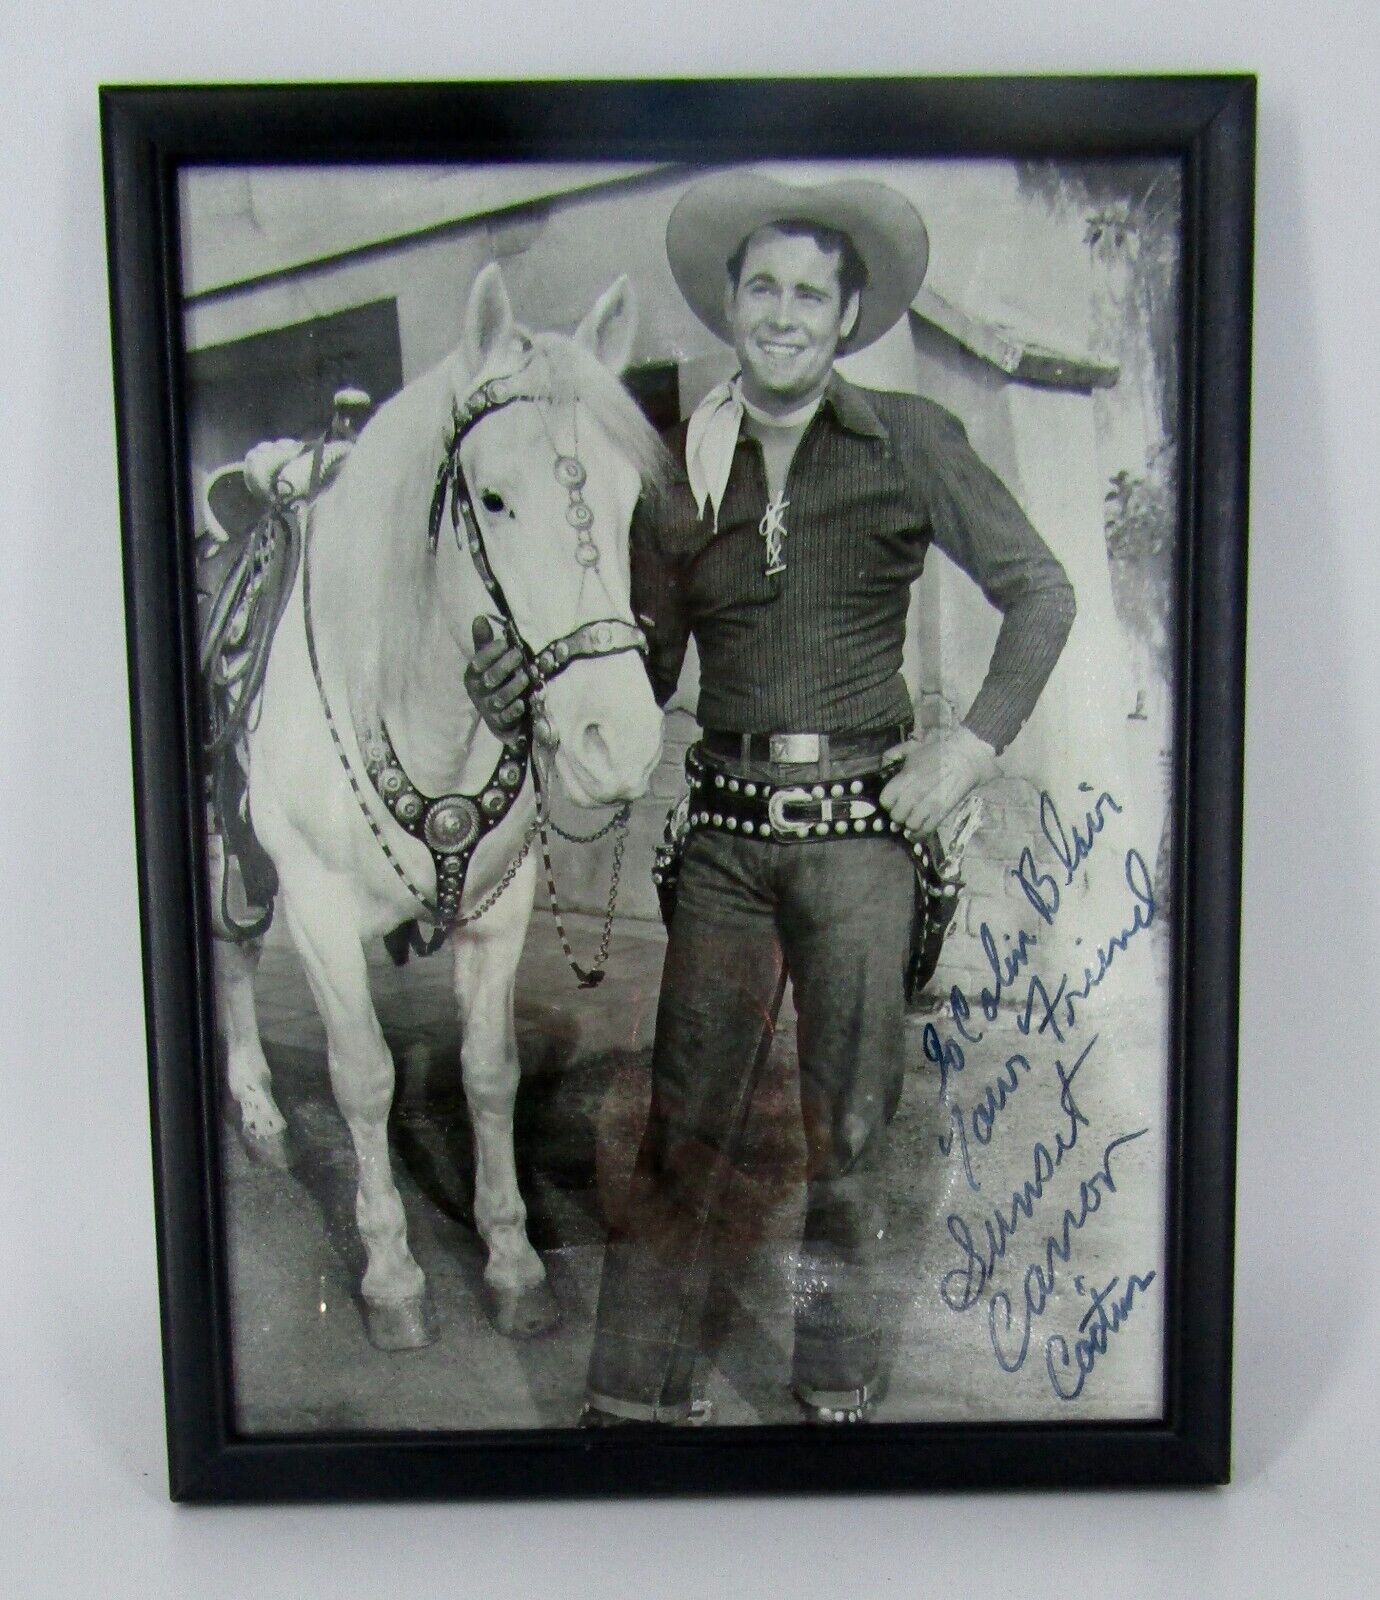 SUNSET CARSON COWBOY ACTOR - Signed / Autographed Publicity Still Photo 10x8